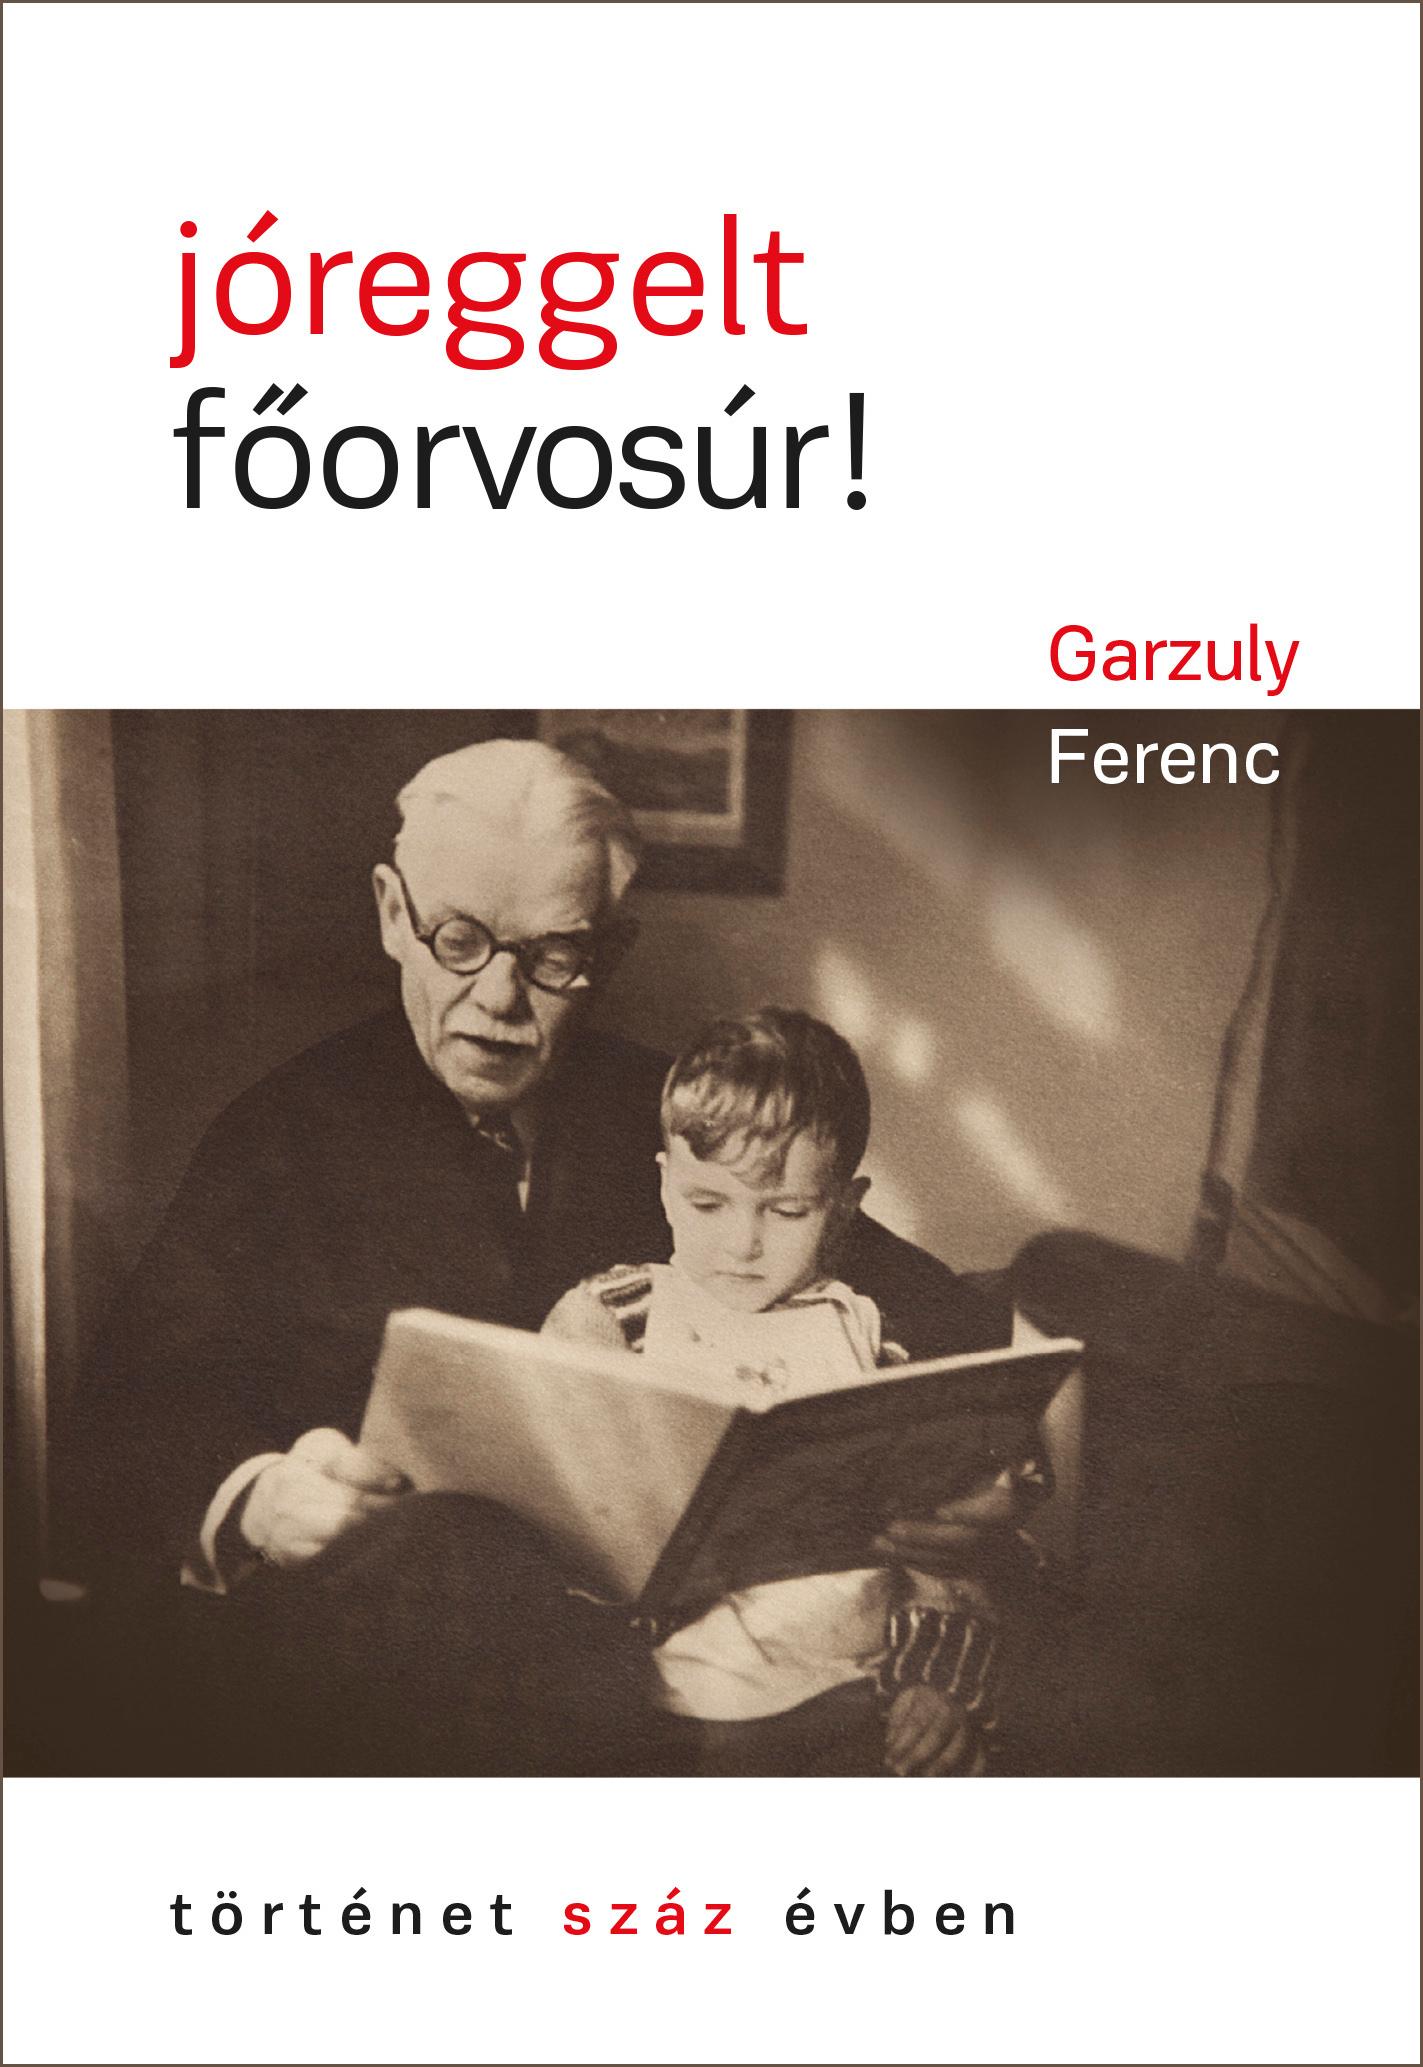 Garzuly Ferenc - jóreggelt, főorvosúr!